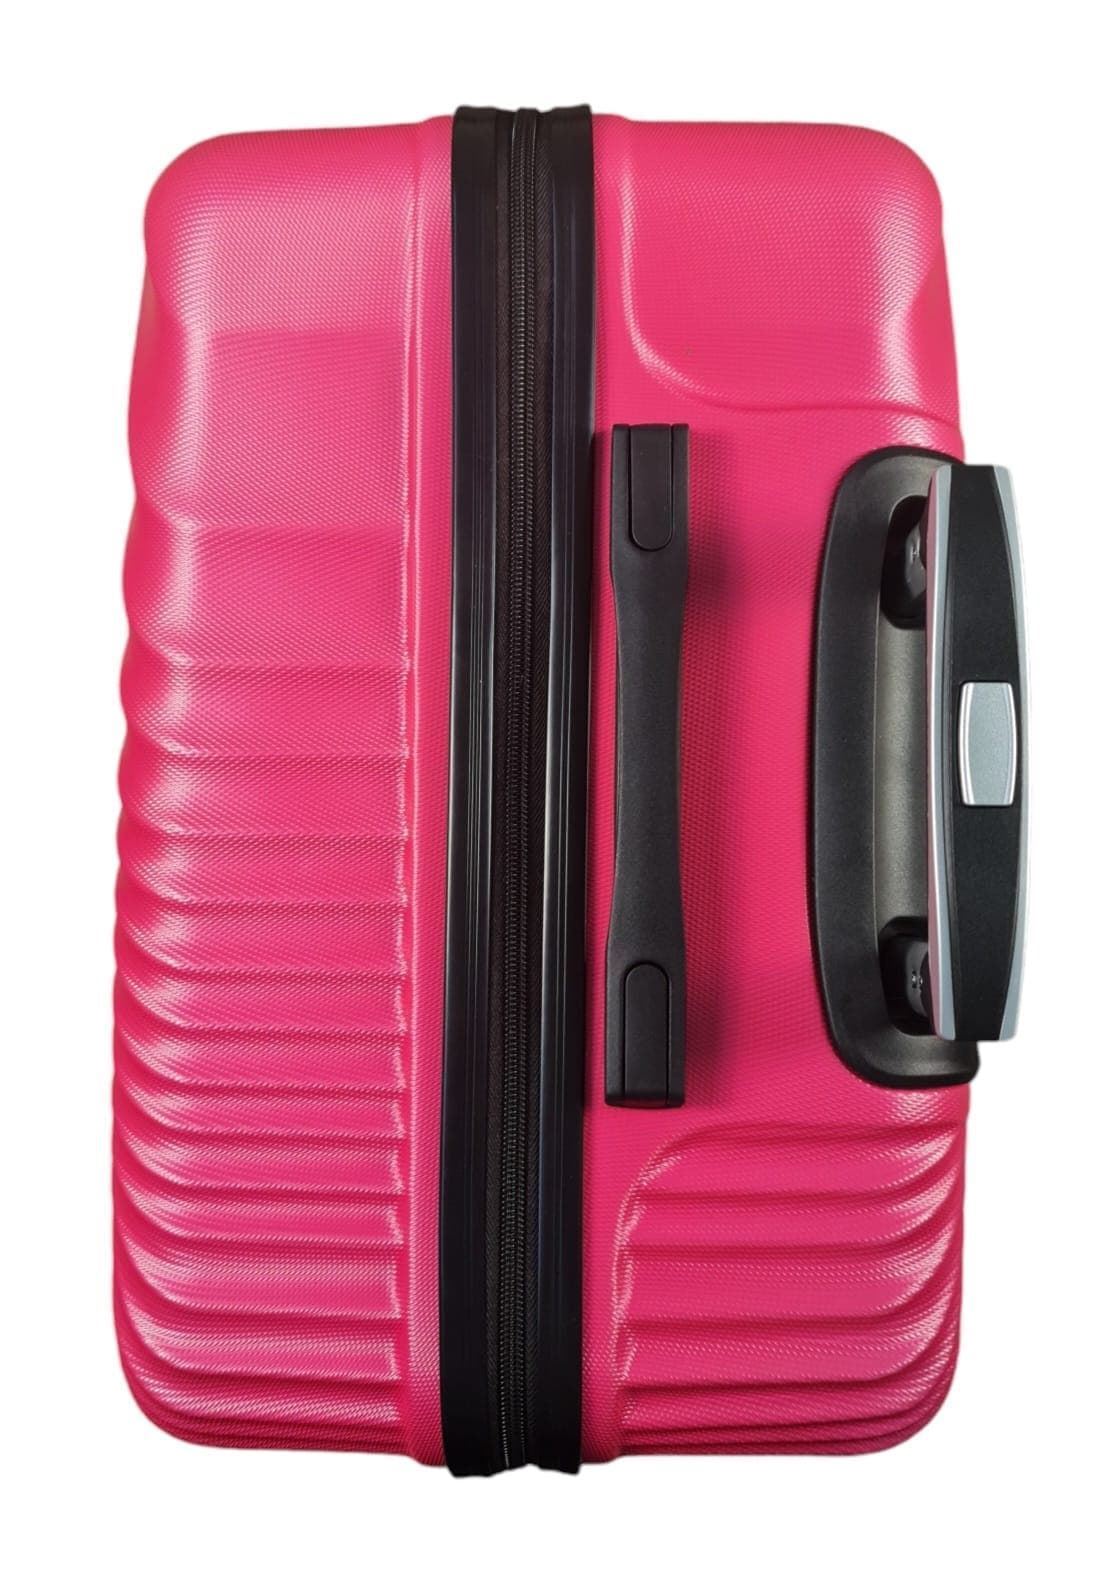 Maleta VIP Grande 75x46x30 cms Muy Ligera Barata Material ABS color Rosa Fucsia - Imagen 7